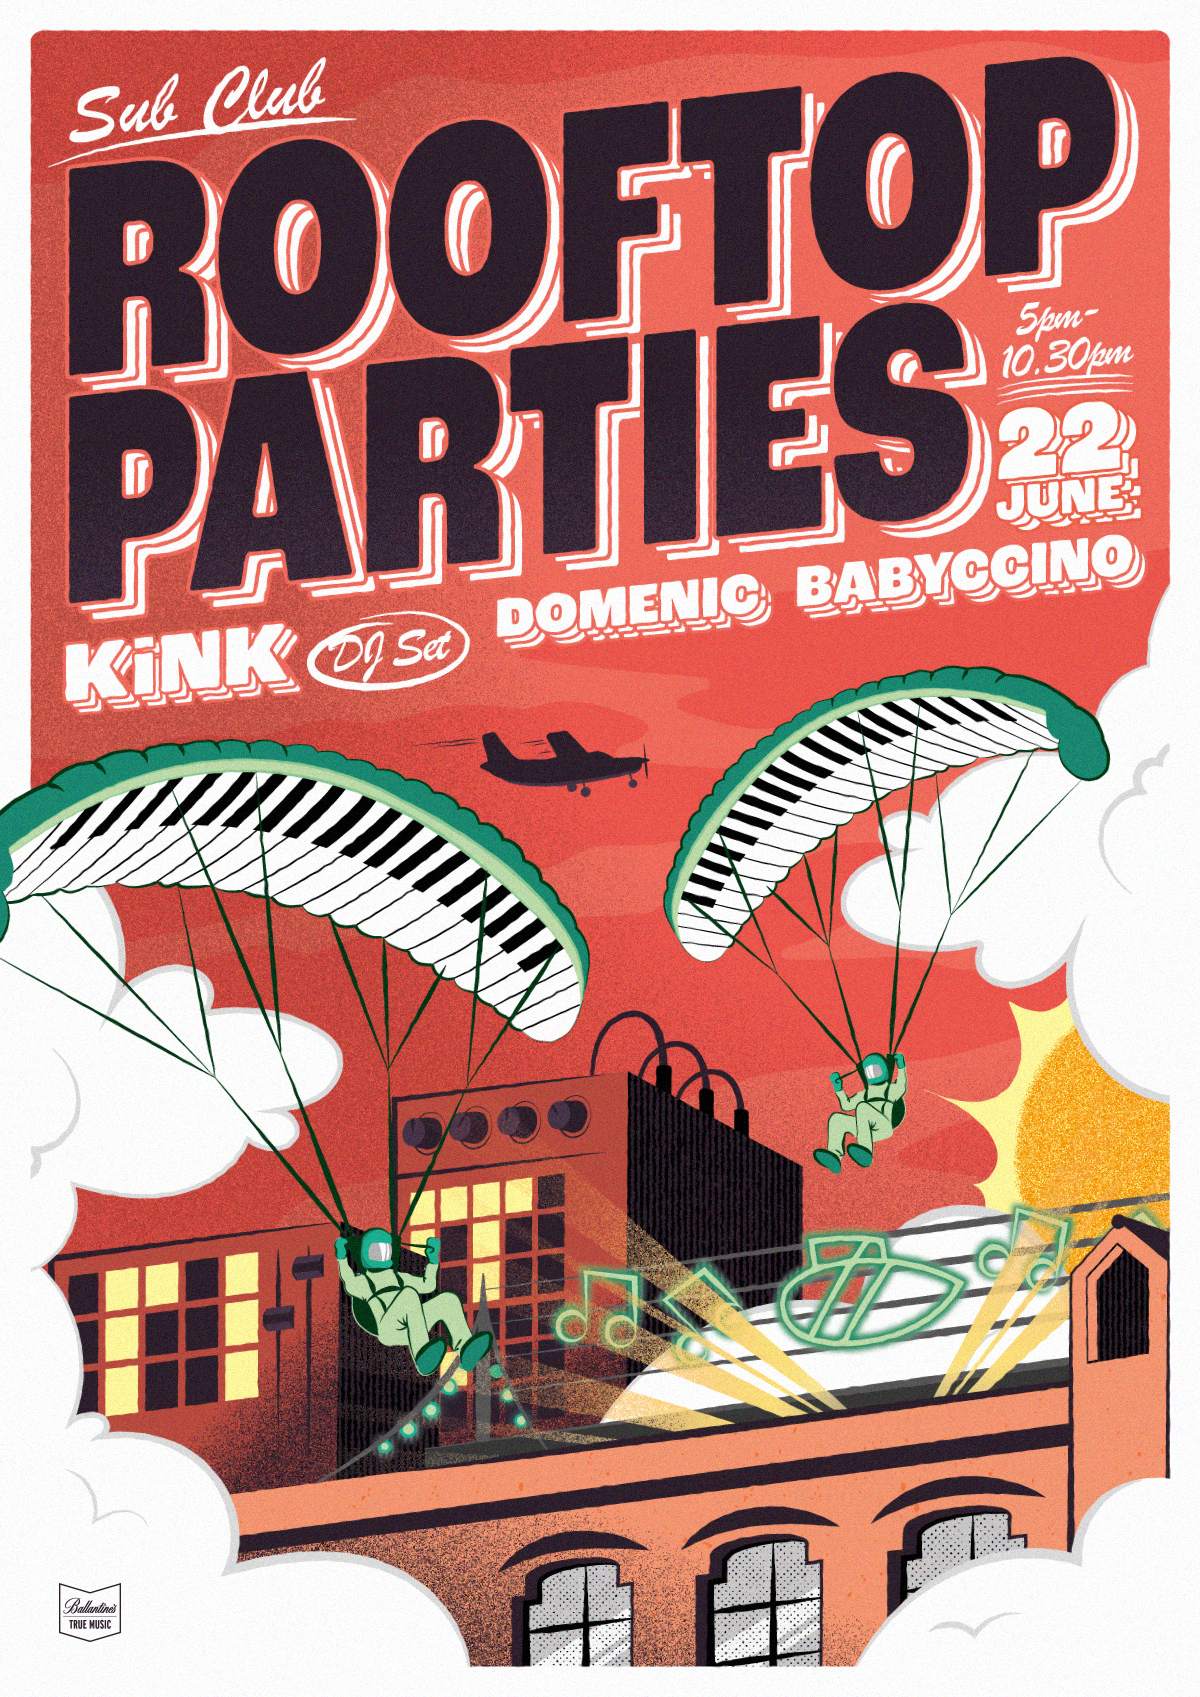 Sub Club Roof Party #2 • KiNK (DJ Set) + Domenic + Babyccino • 5pm-10:30pm - フライヤー表